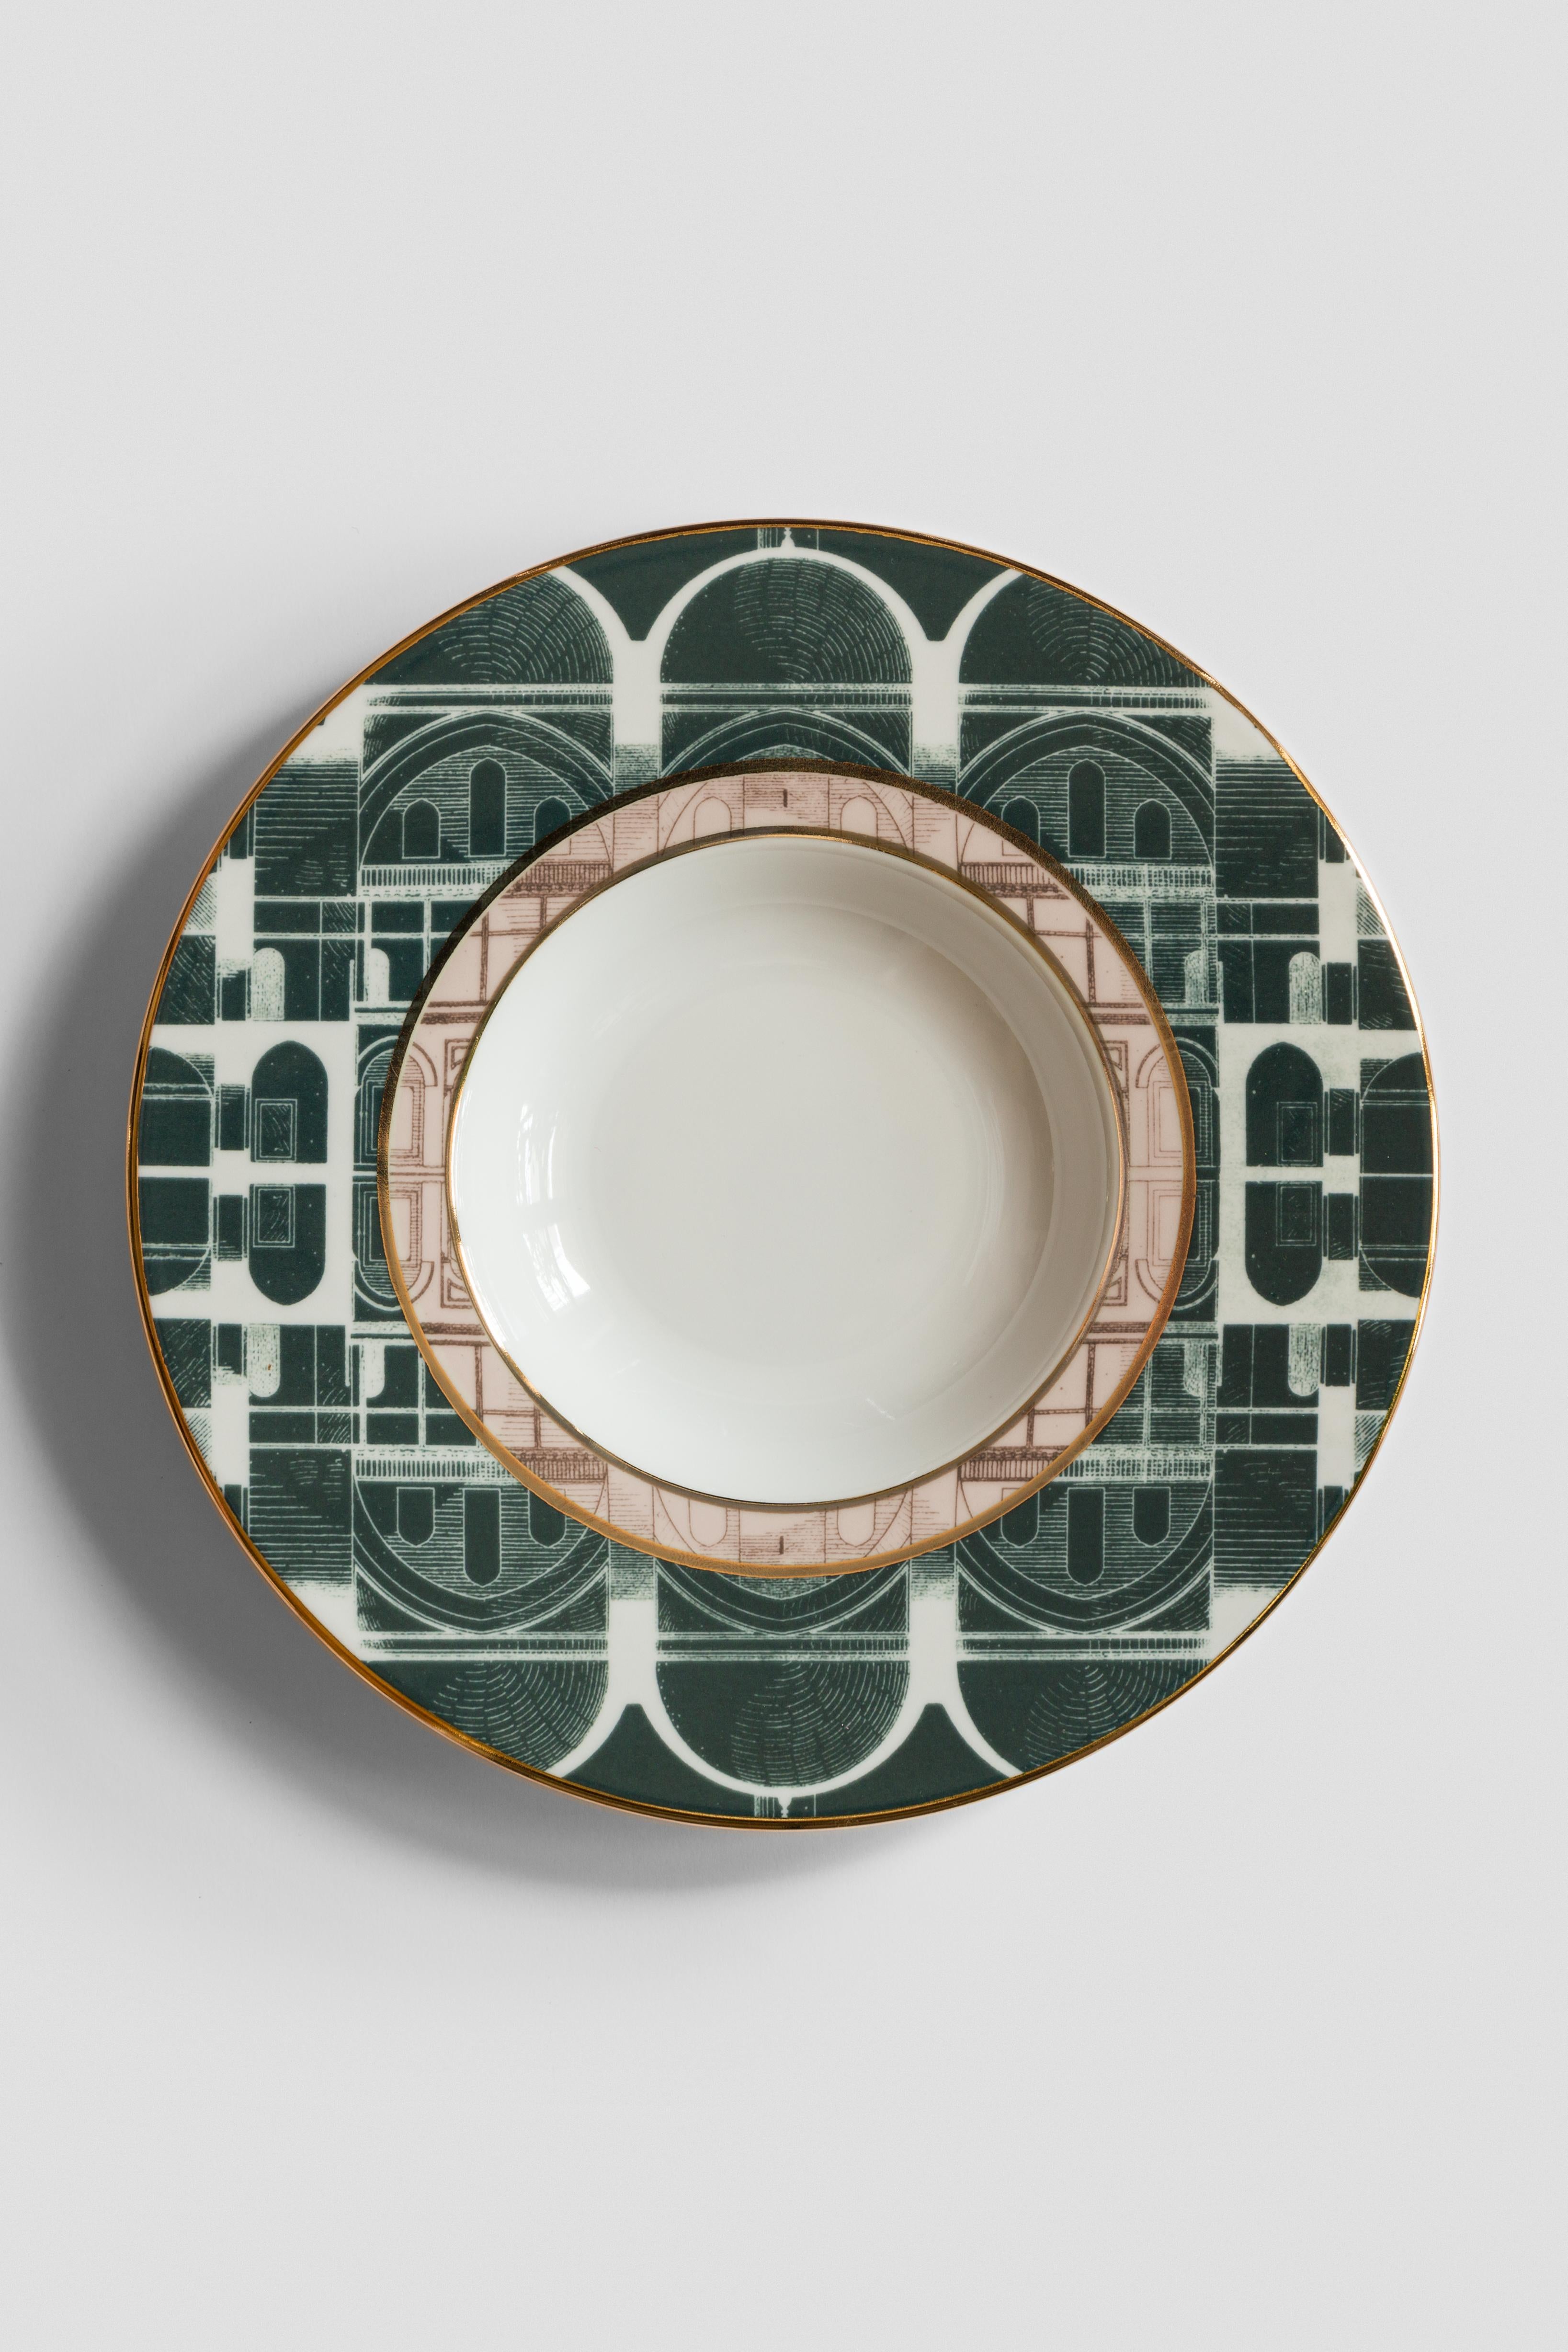 Lebanon, Six Contemporary Porcelain Soup Plates with Decorative Design For Sale 3